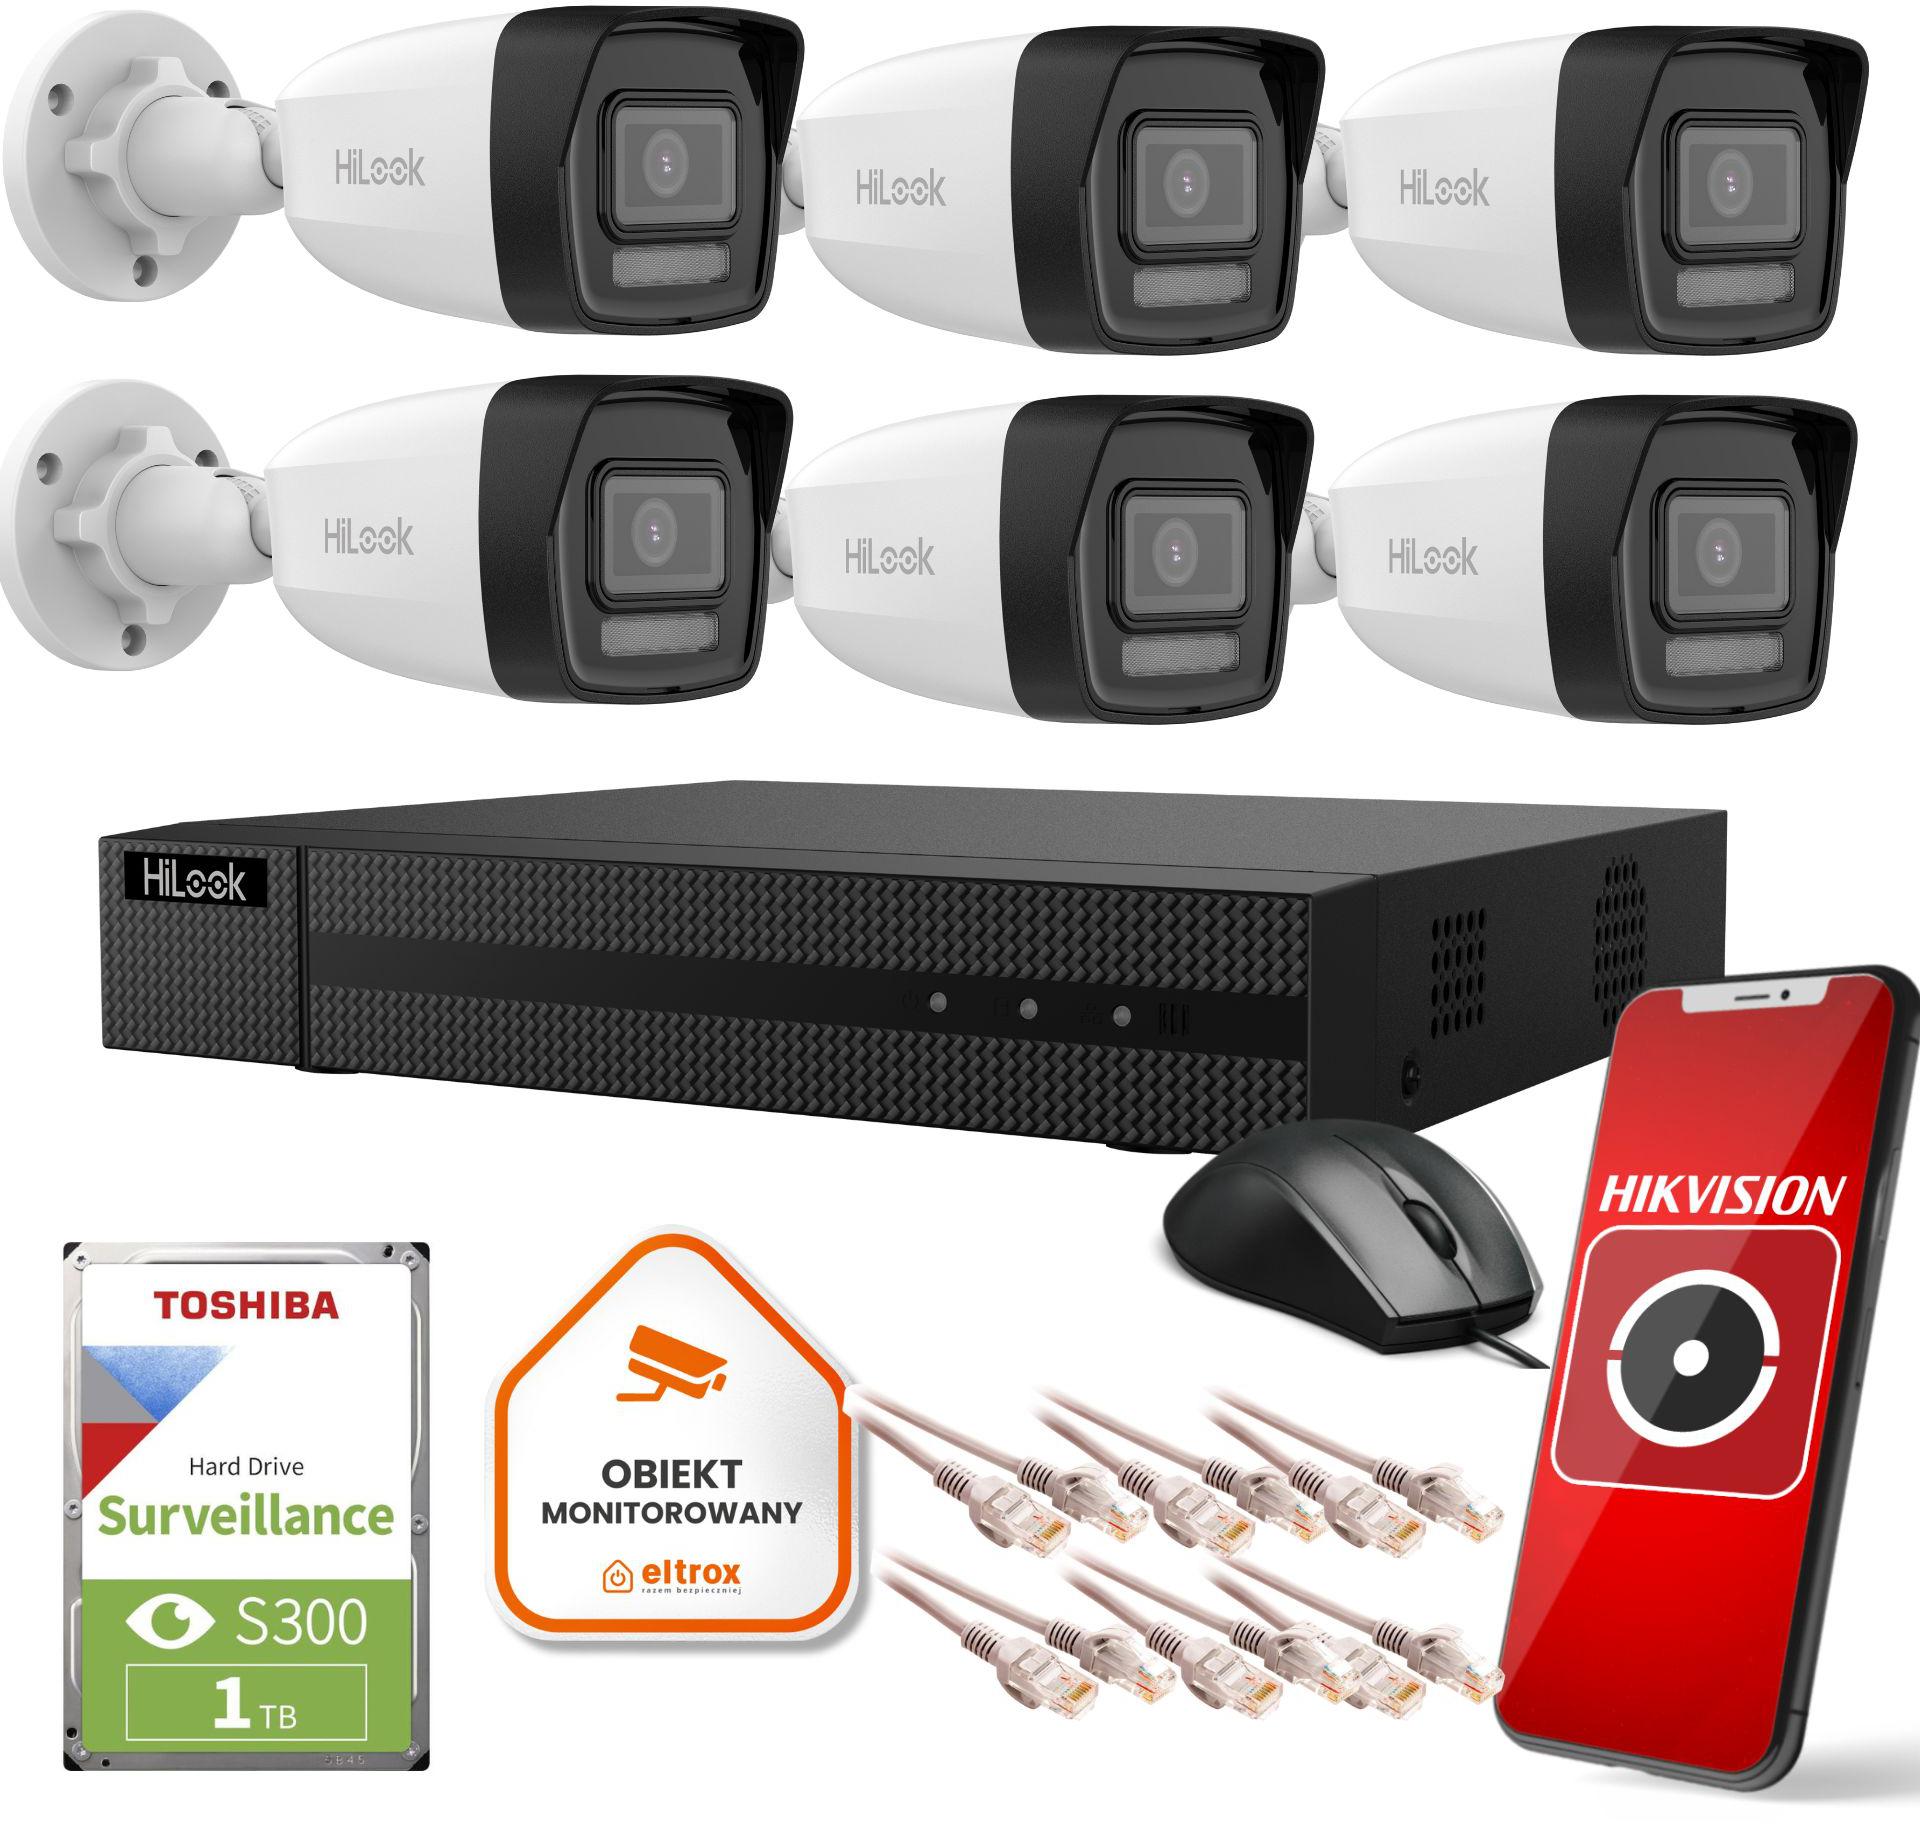 Kompletny zestaw monitoringu Hilook by Hikvision 6 kamer IP, rejestratorem i dyskiem do Twojego domu